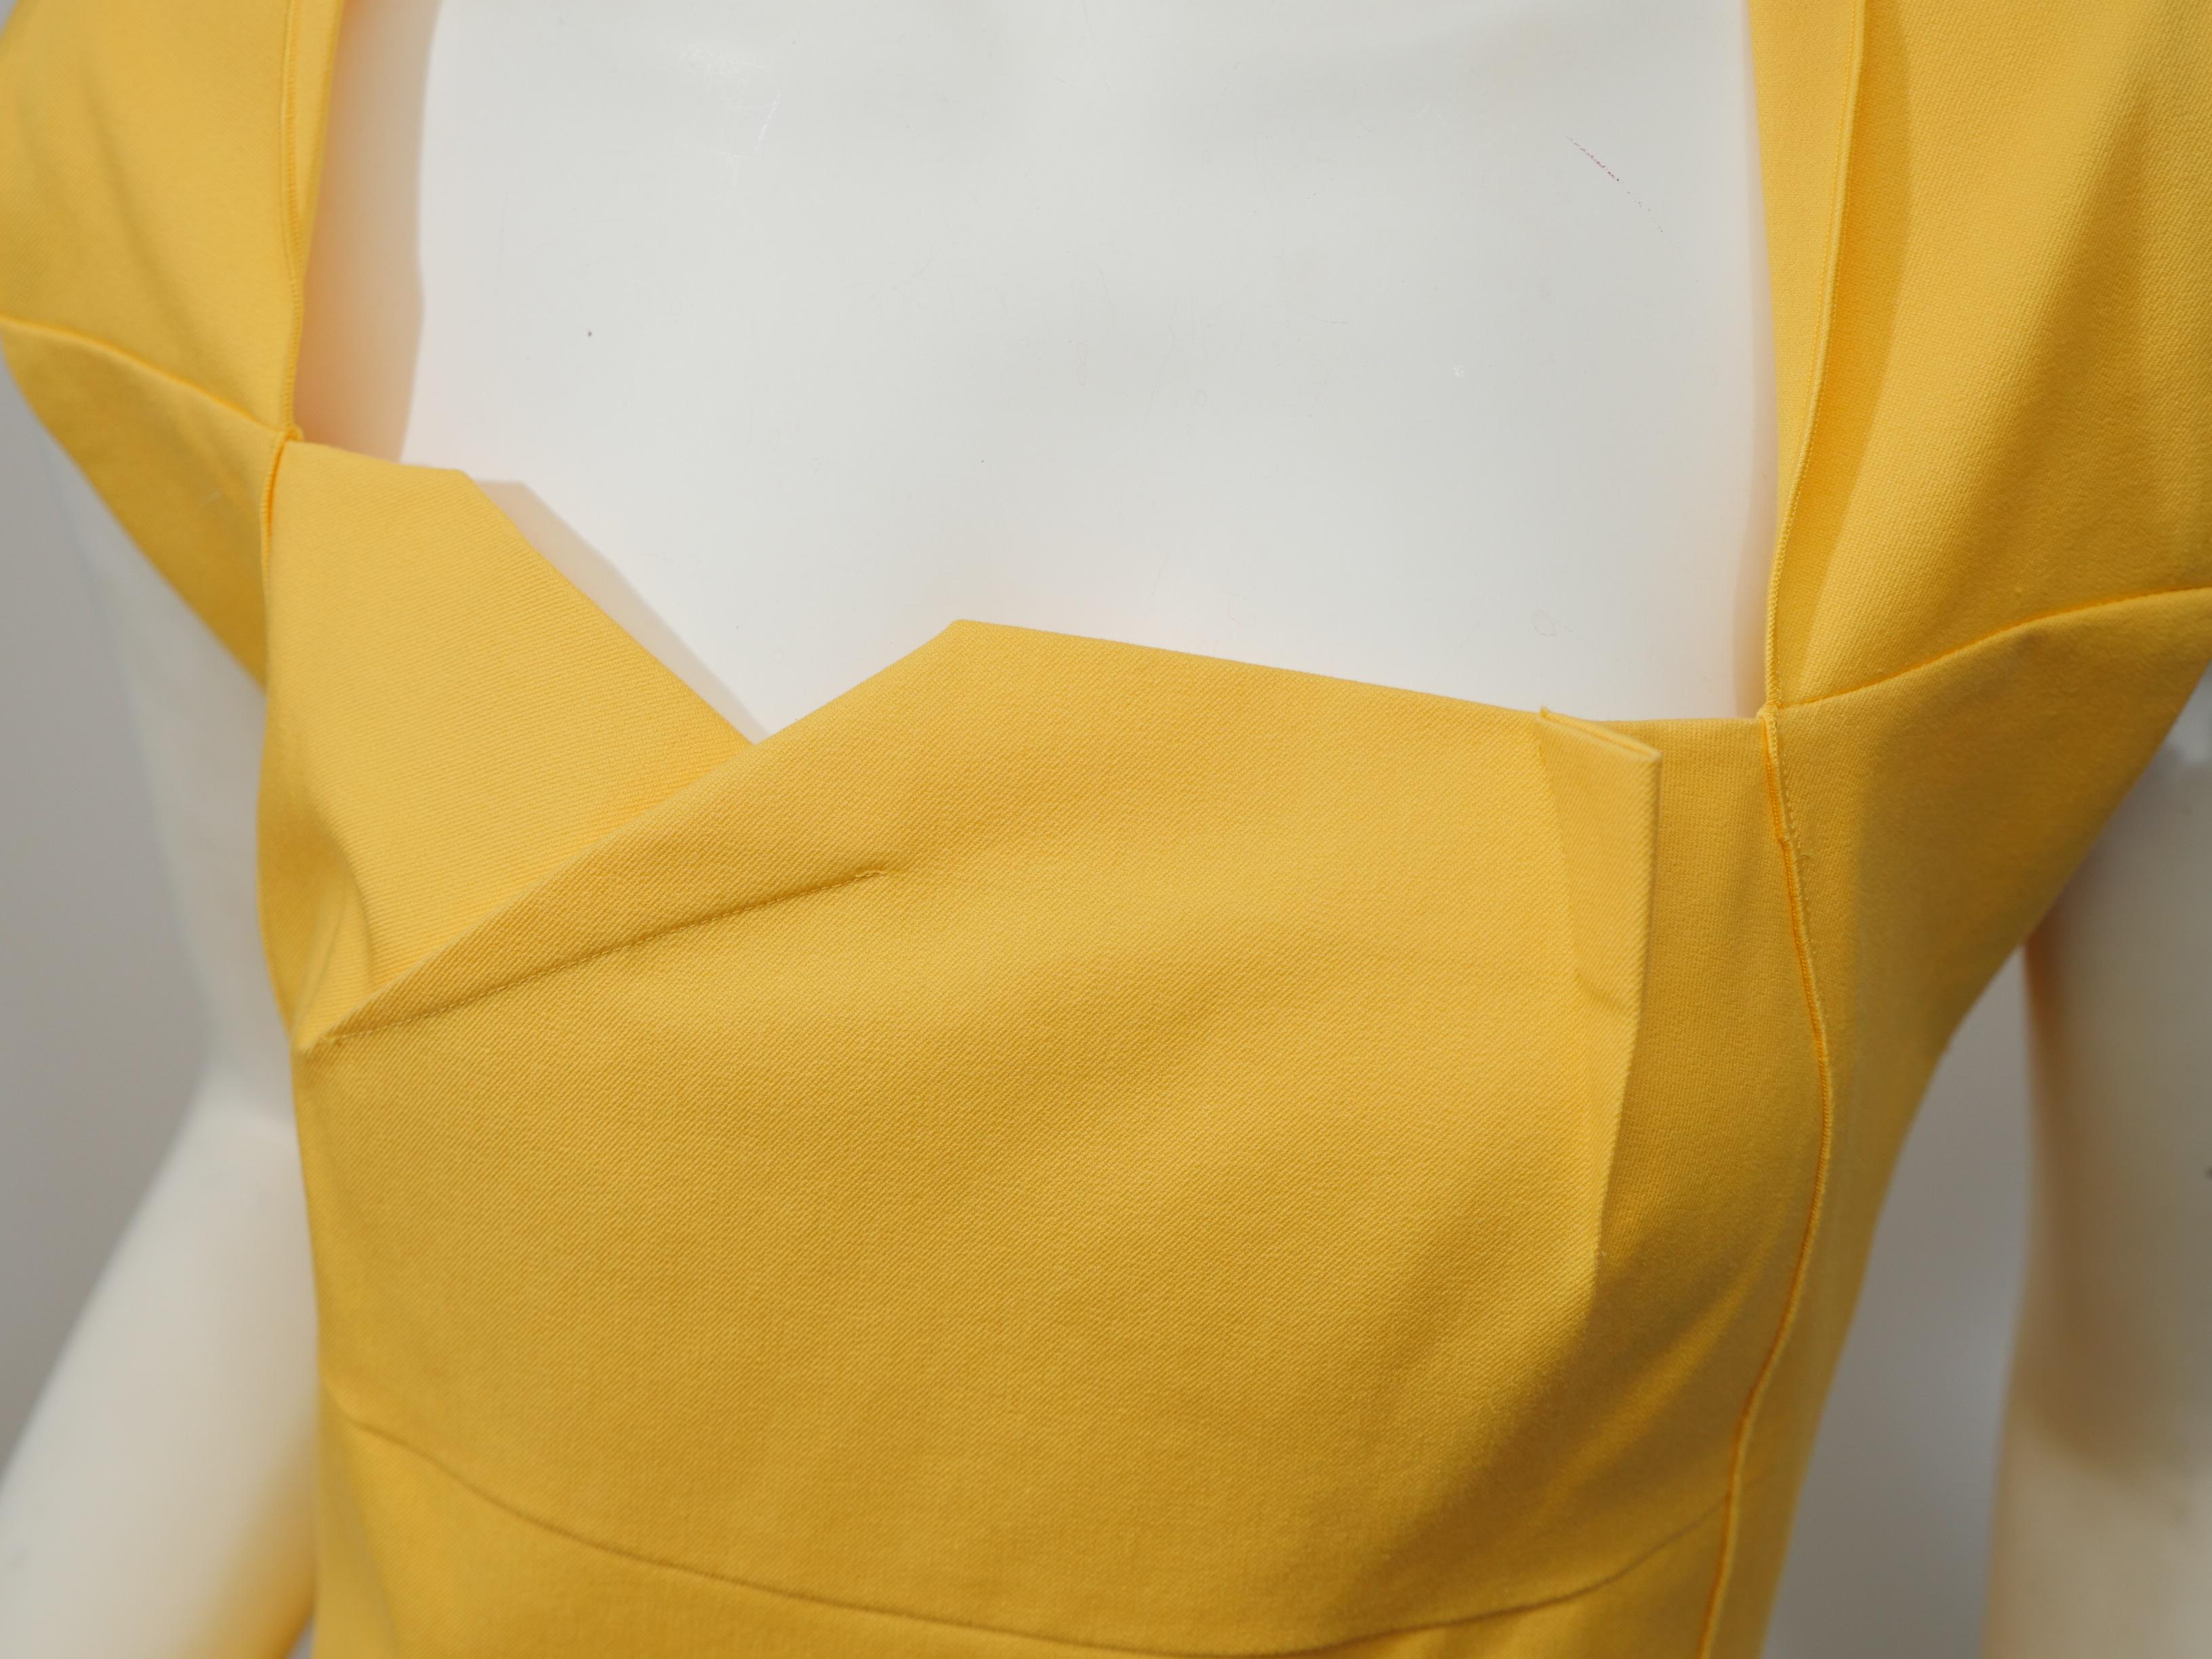 yellow cap sleeve dress